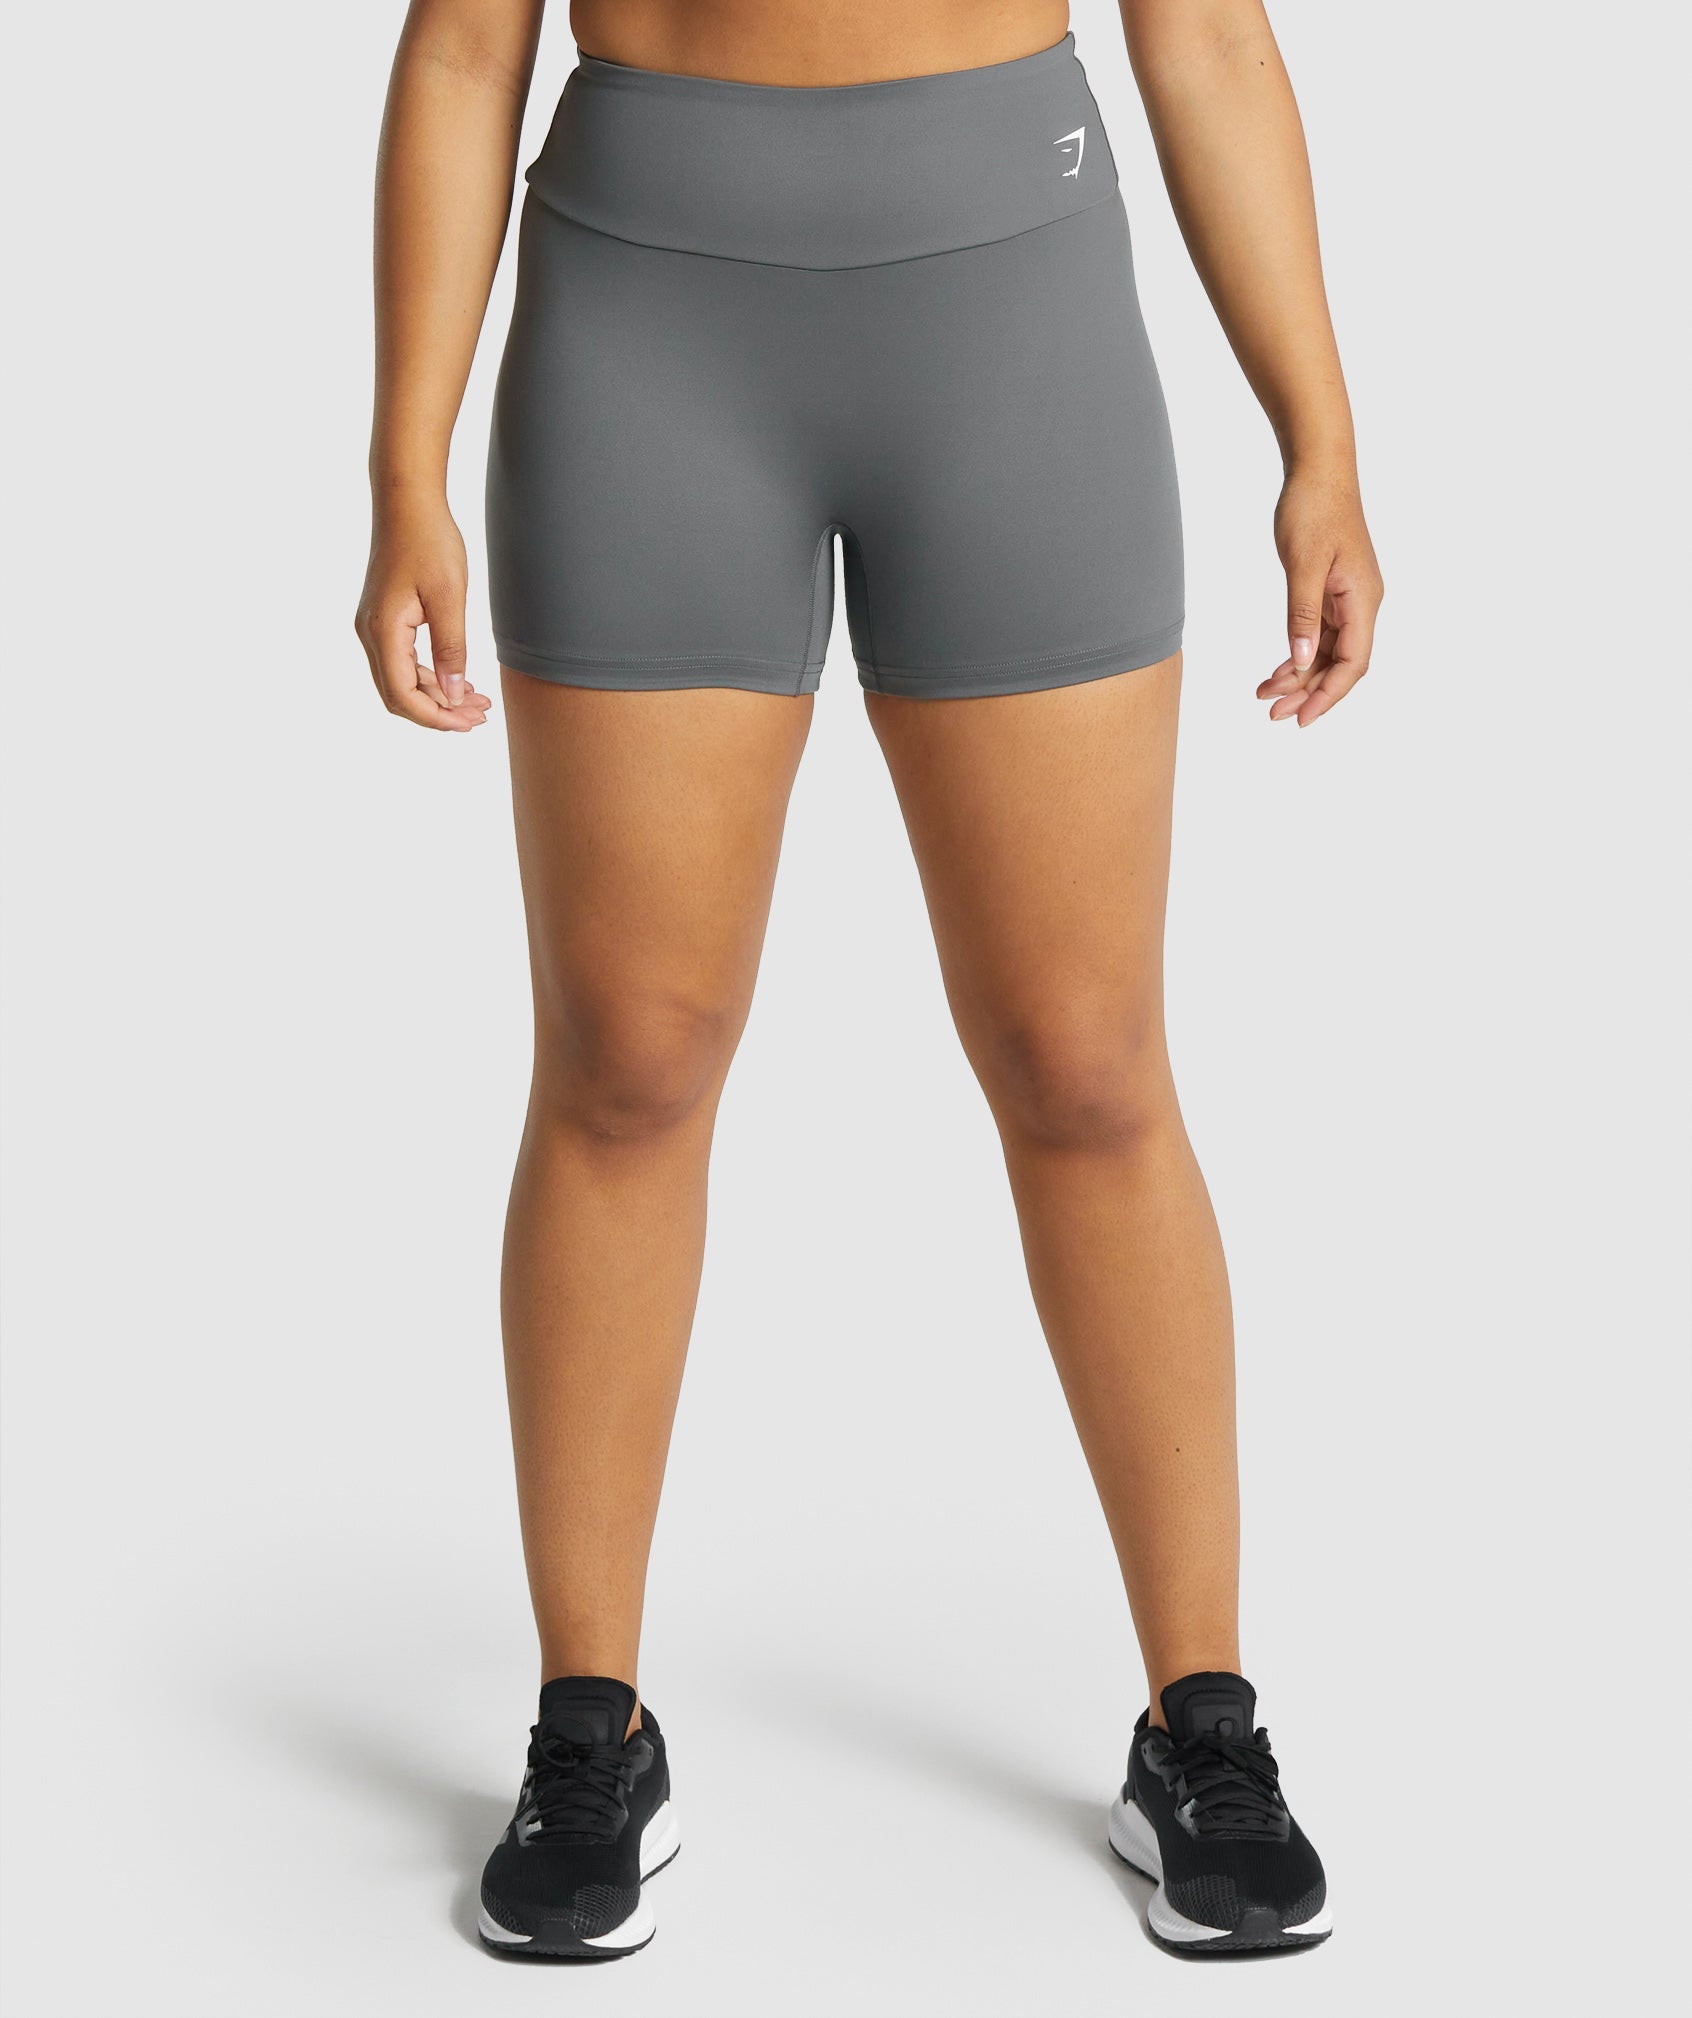 Women's Workout Booty Shorts - Gymshark